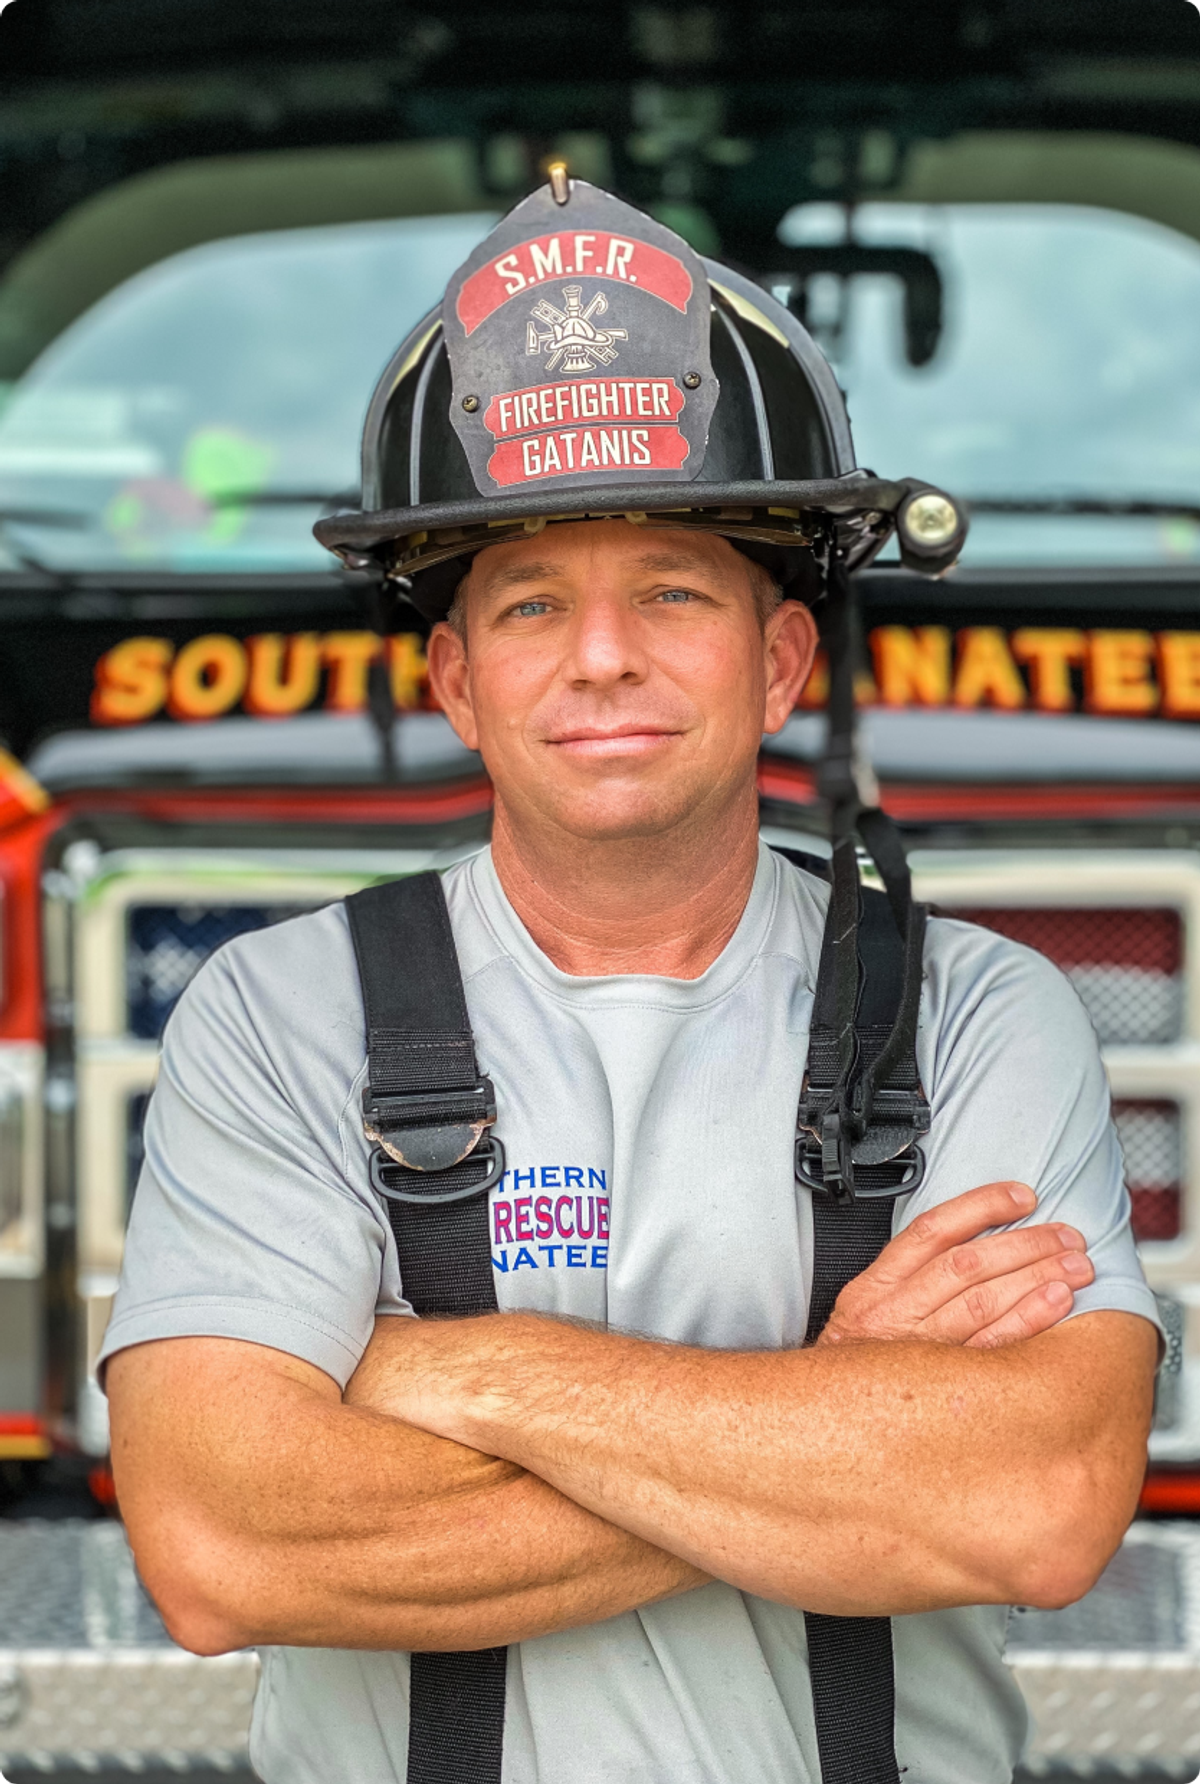  Rick Gatanis Southern Manatee Fire